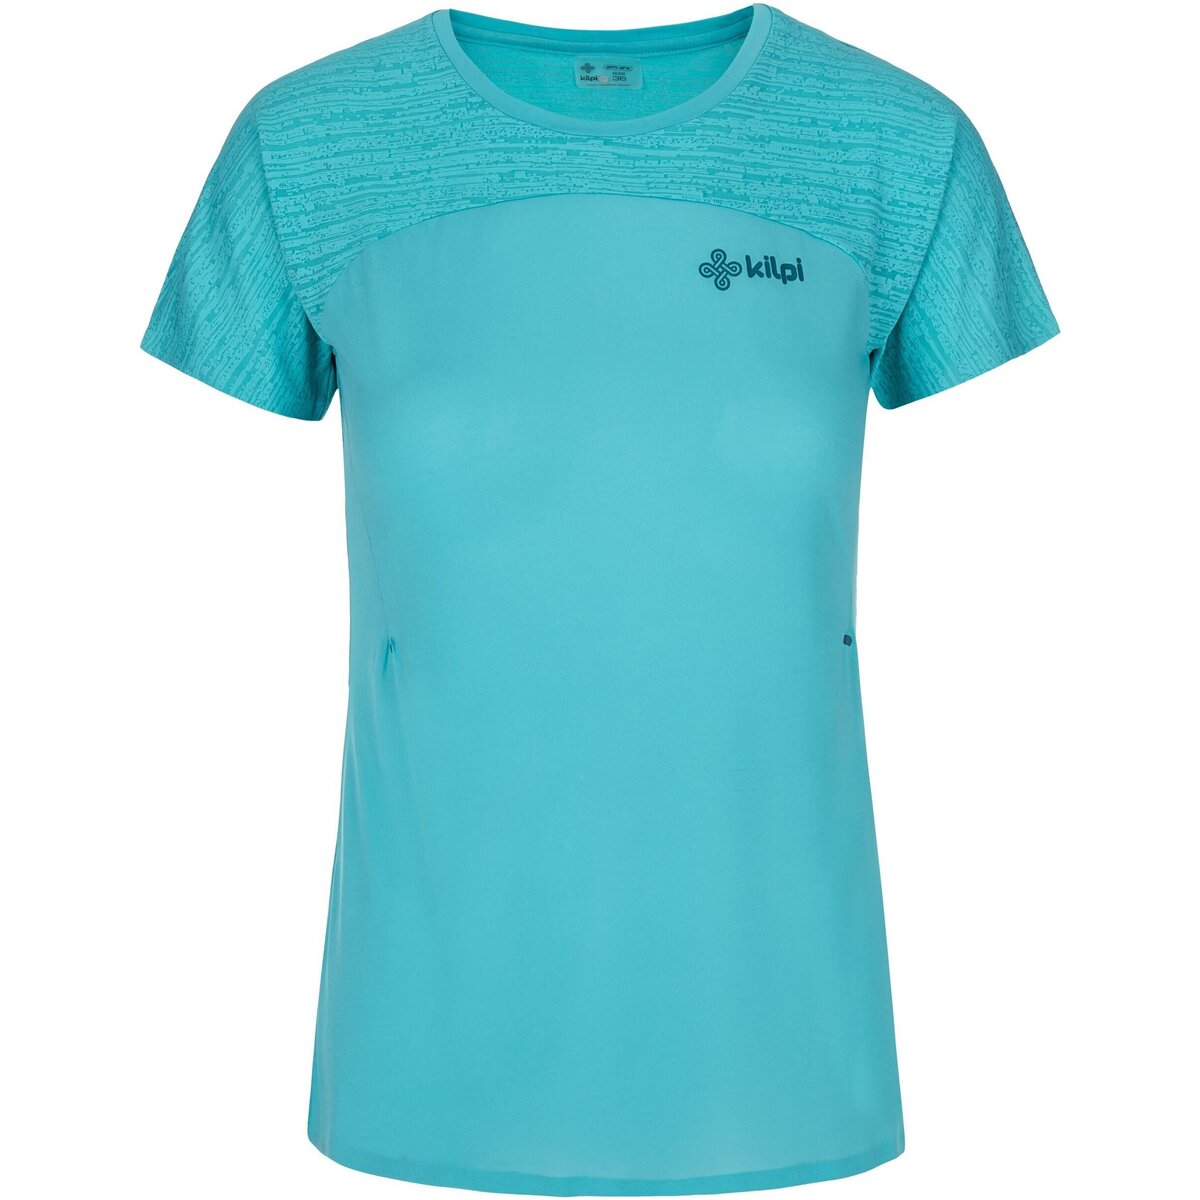 Kilpi Bleu T-shirt running femme AMELI-W jFrVpLUt